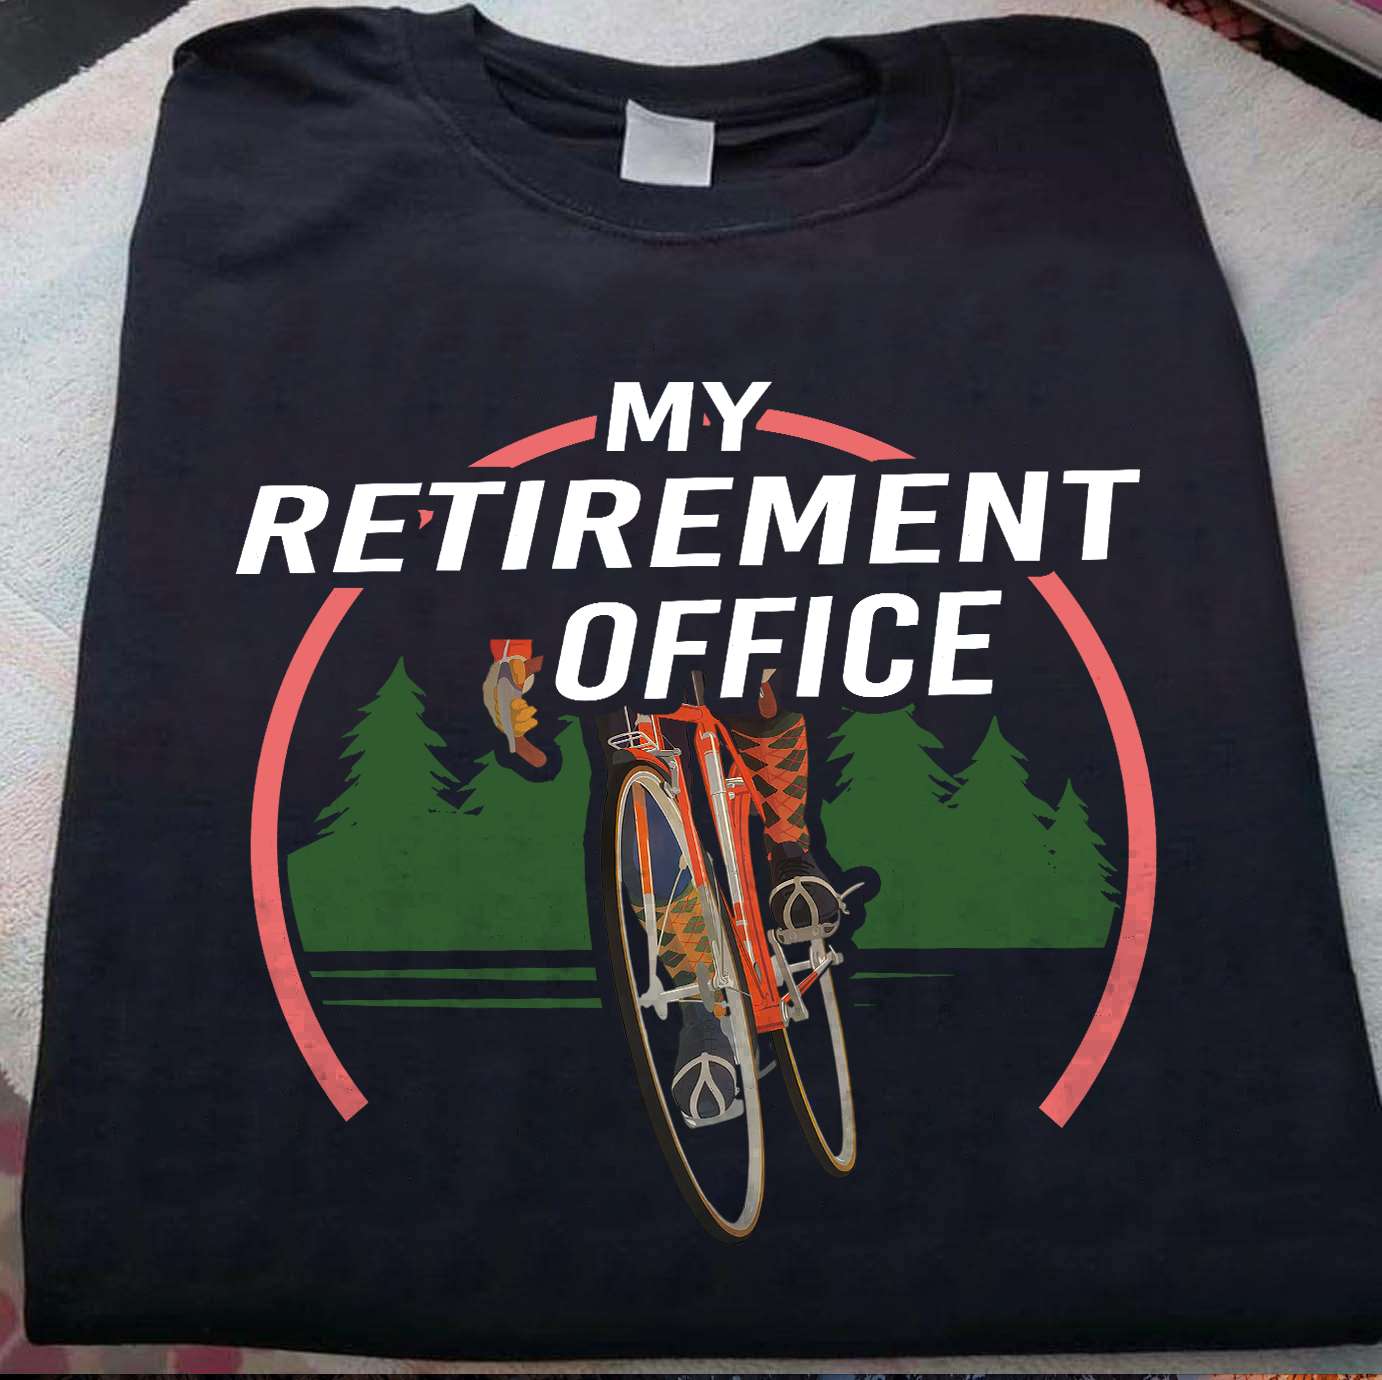 My retirement office - Life behind bar, retired biker